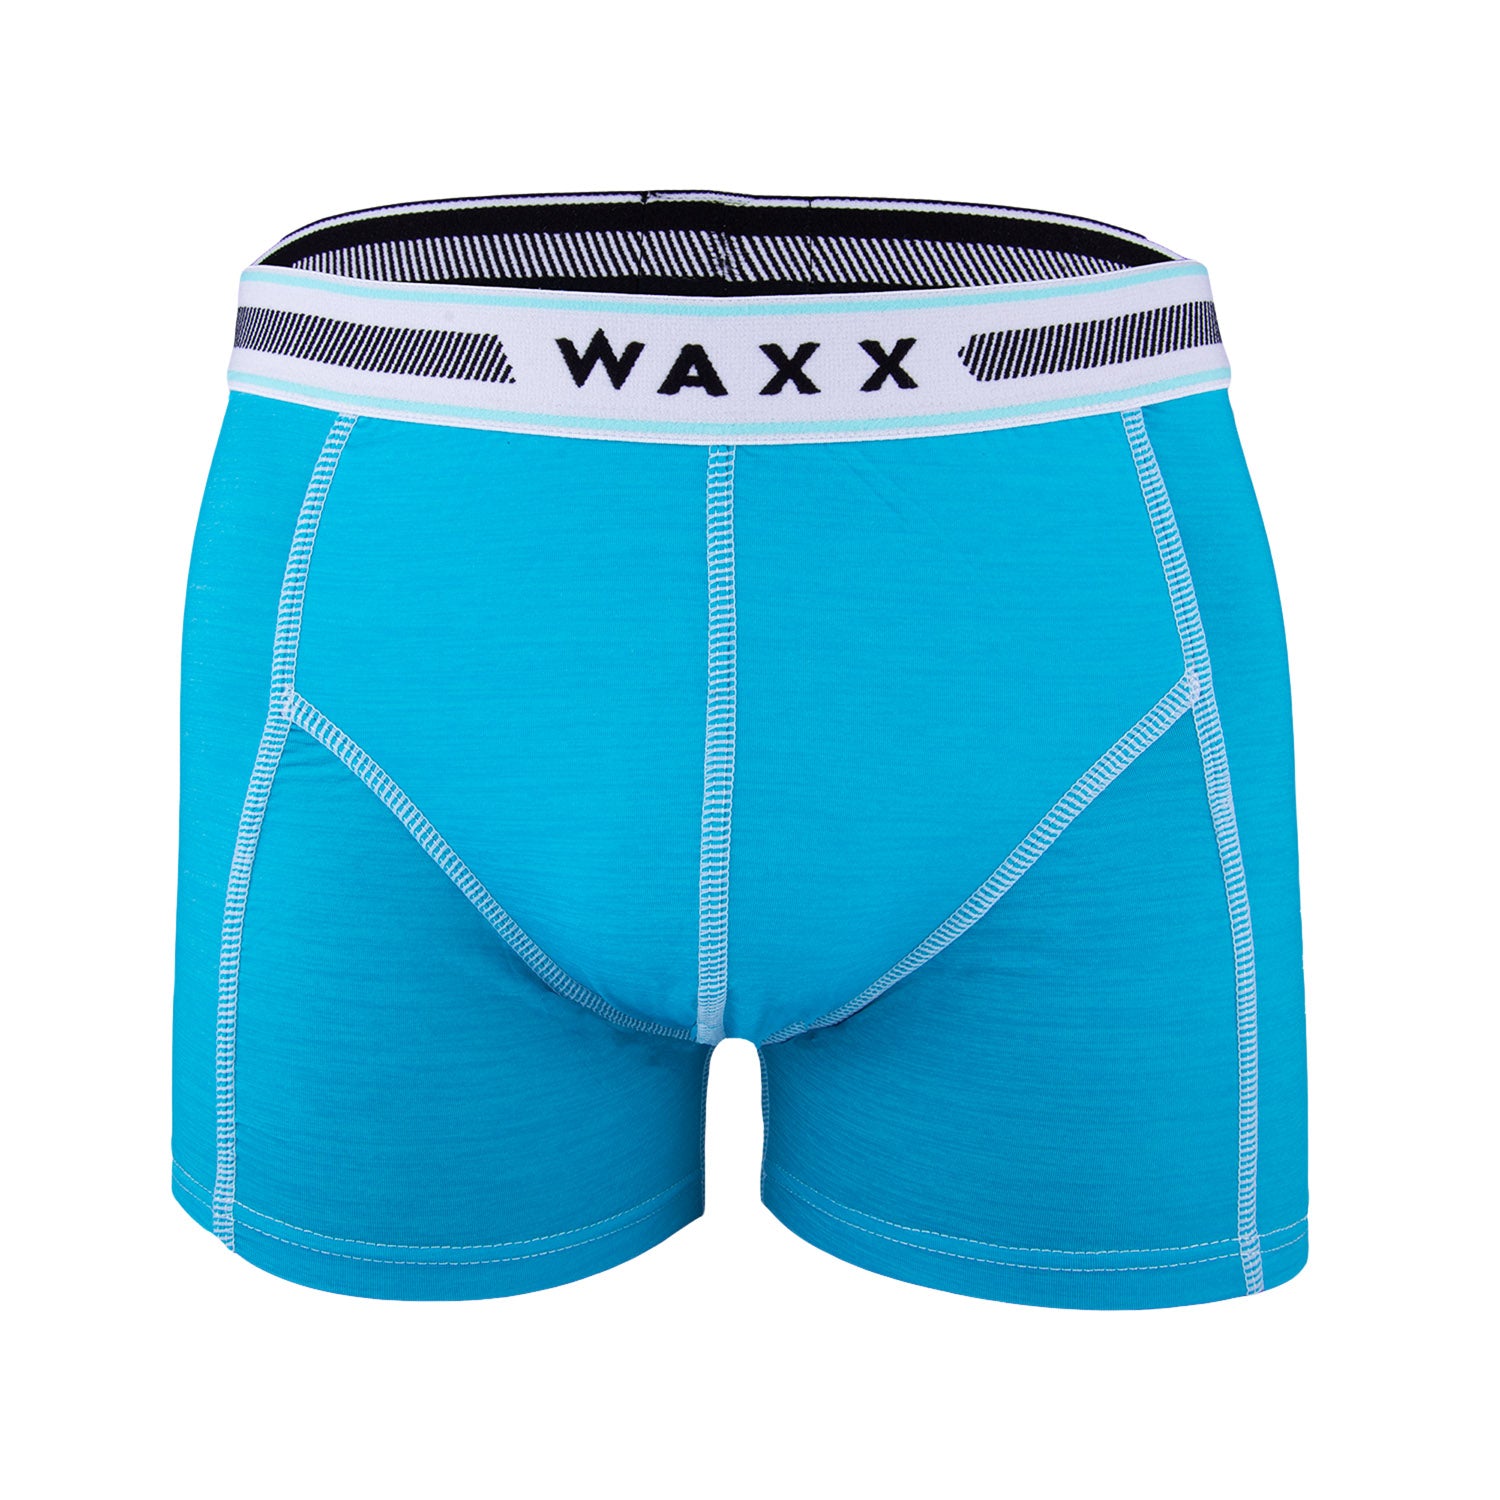 Mint Waxx Boxer Shorts